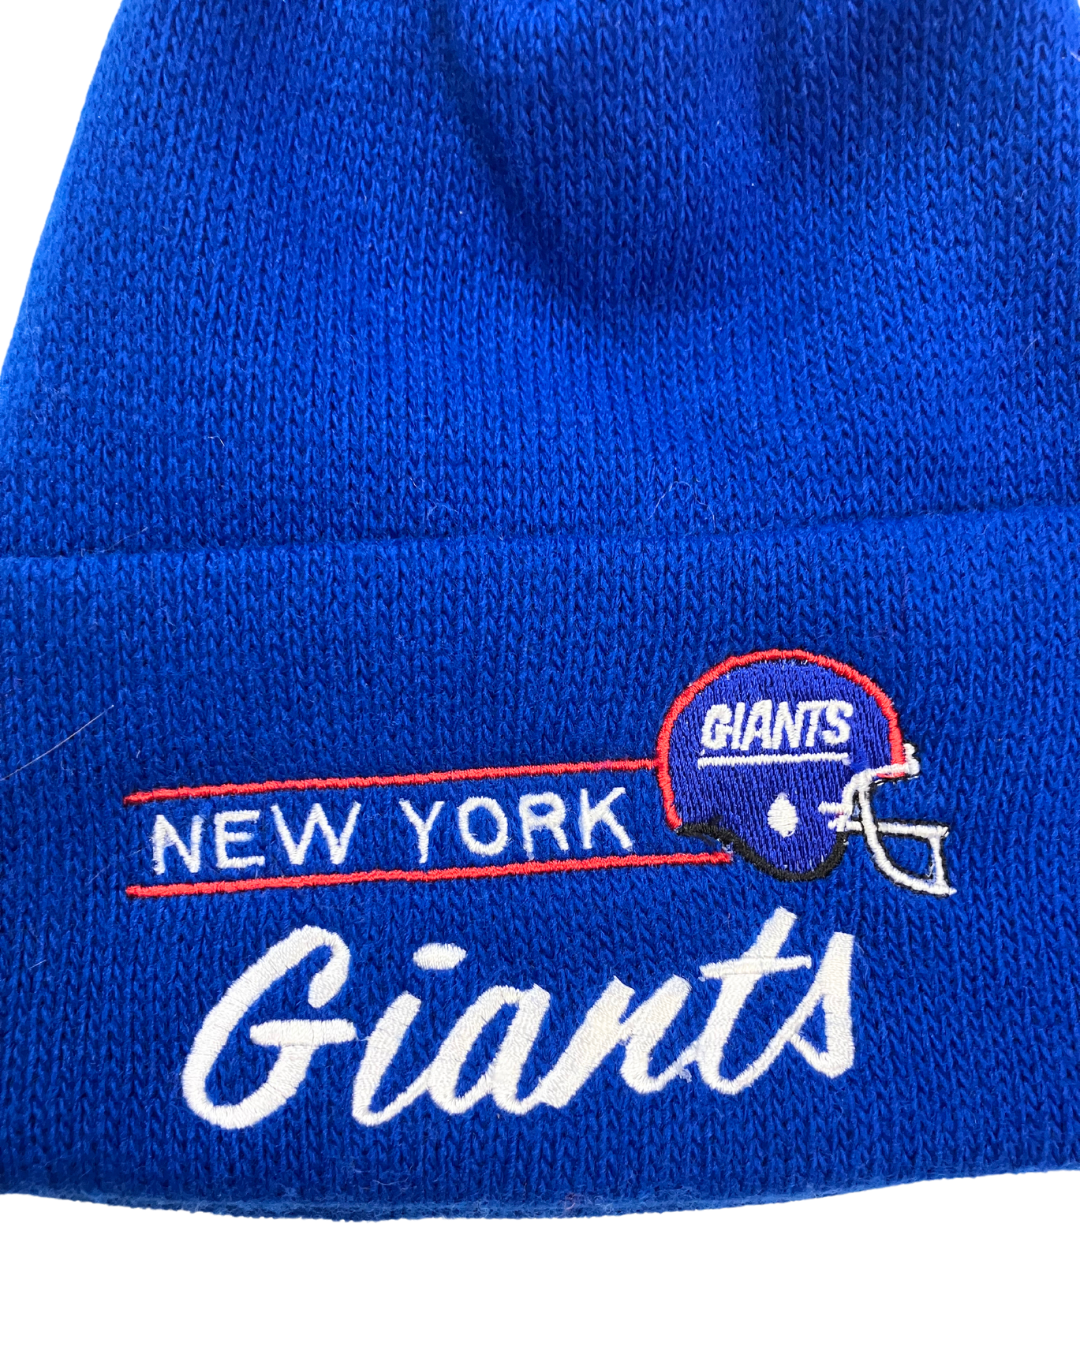 New York Giants Beanie